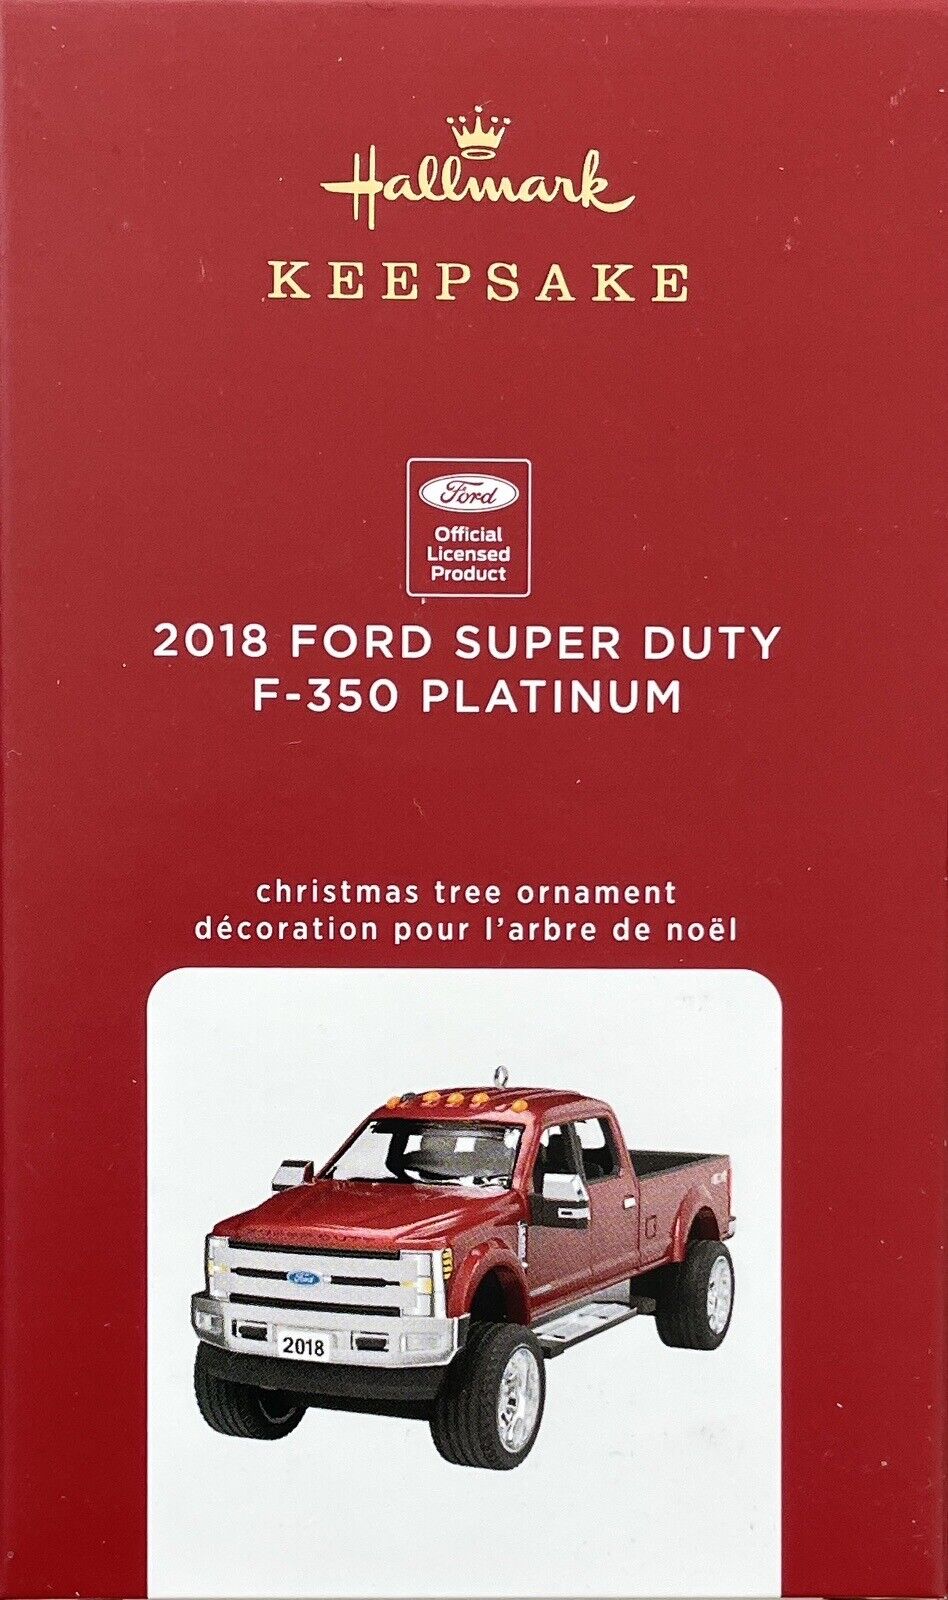 2020 Hallmark Keepsake Ornament 2018 Ford Super Duty F-350 Platinum